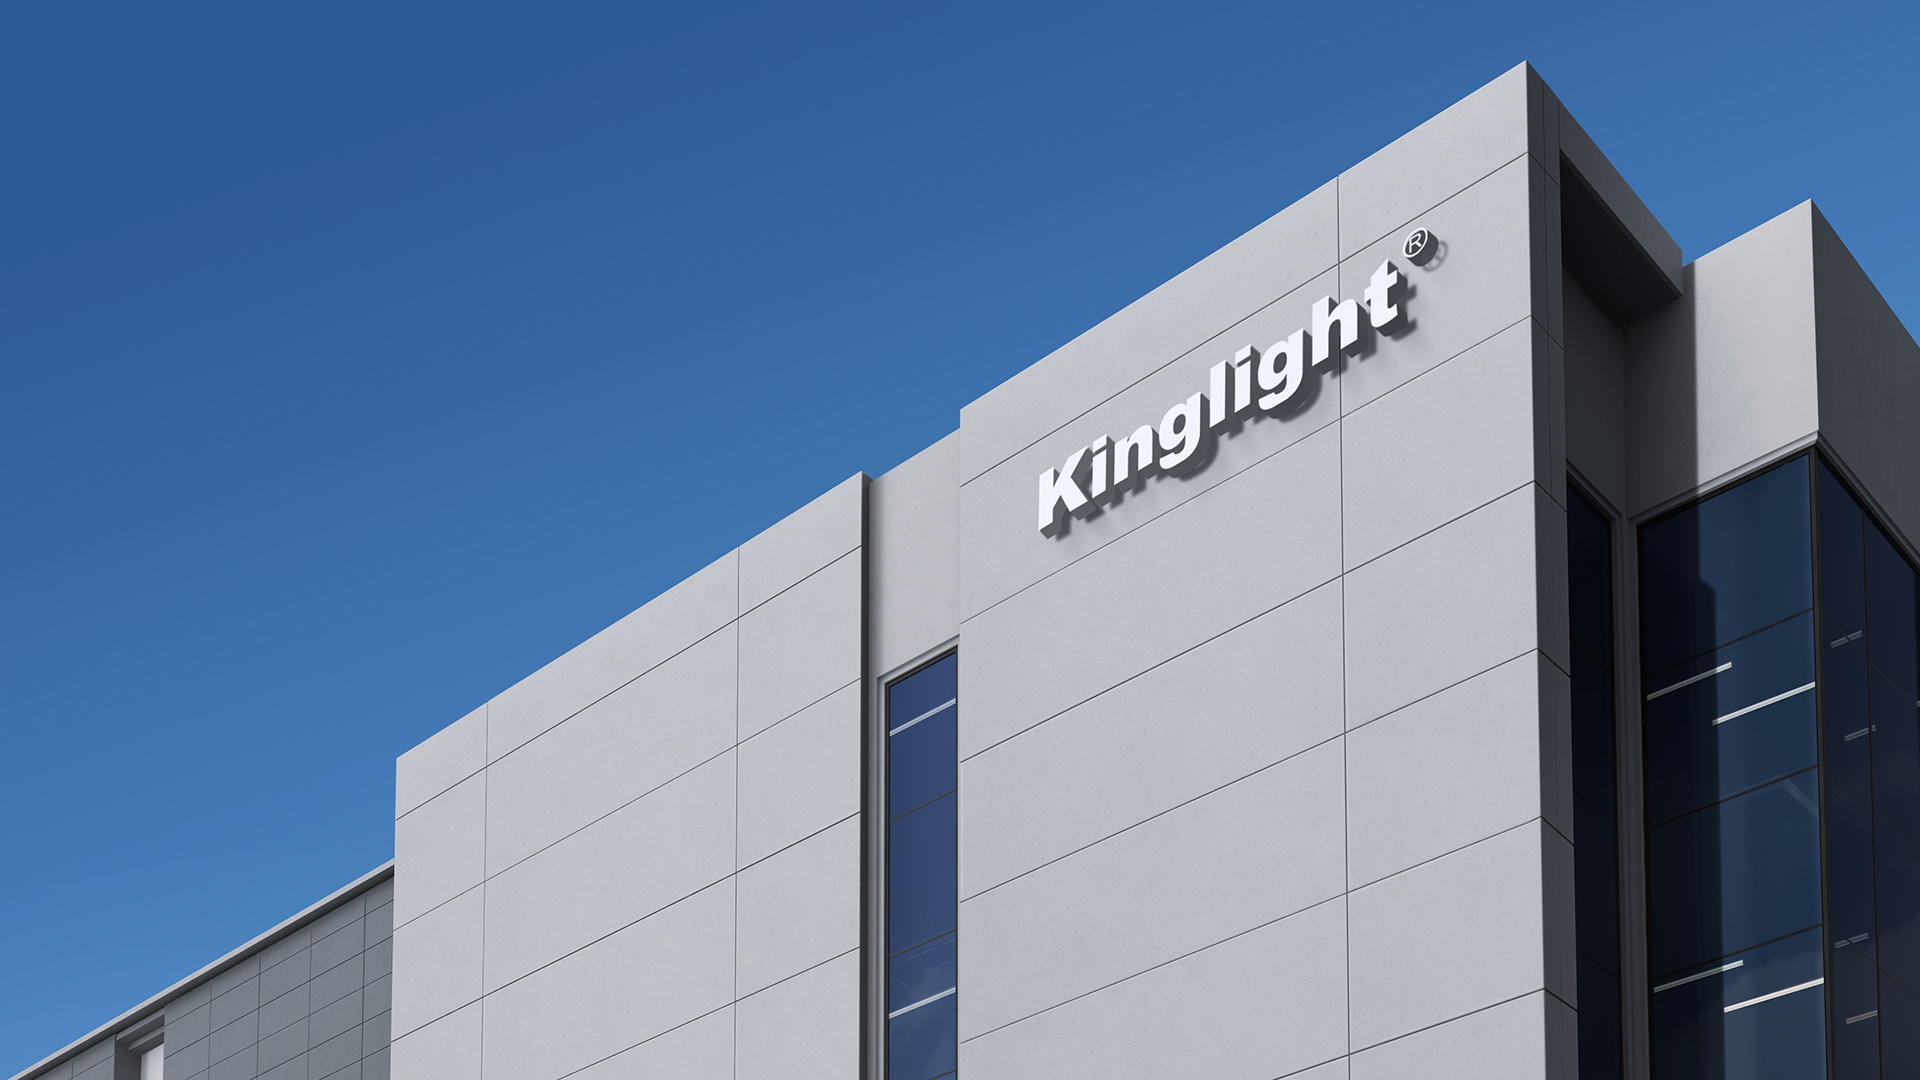 kinglight,kinglight Optoelectronics,kinglight Semiconductor,optocoupler,optocoupler,LED package,LED Display